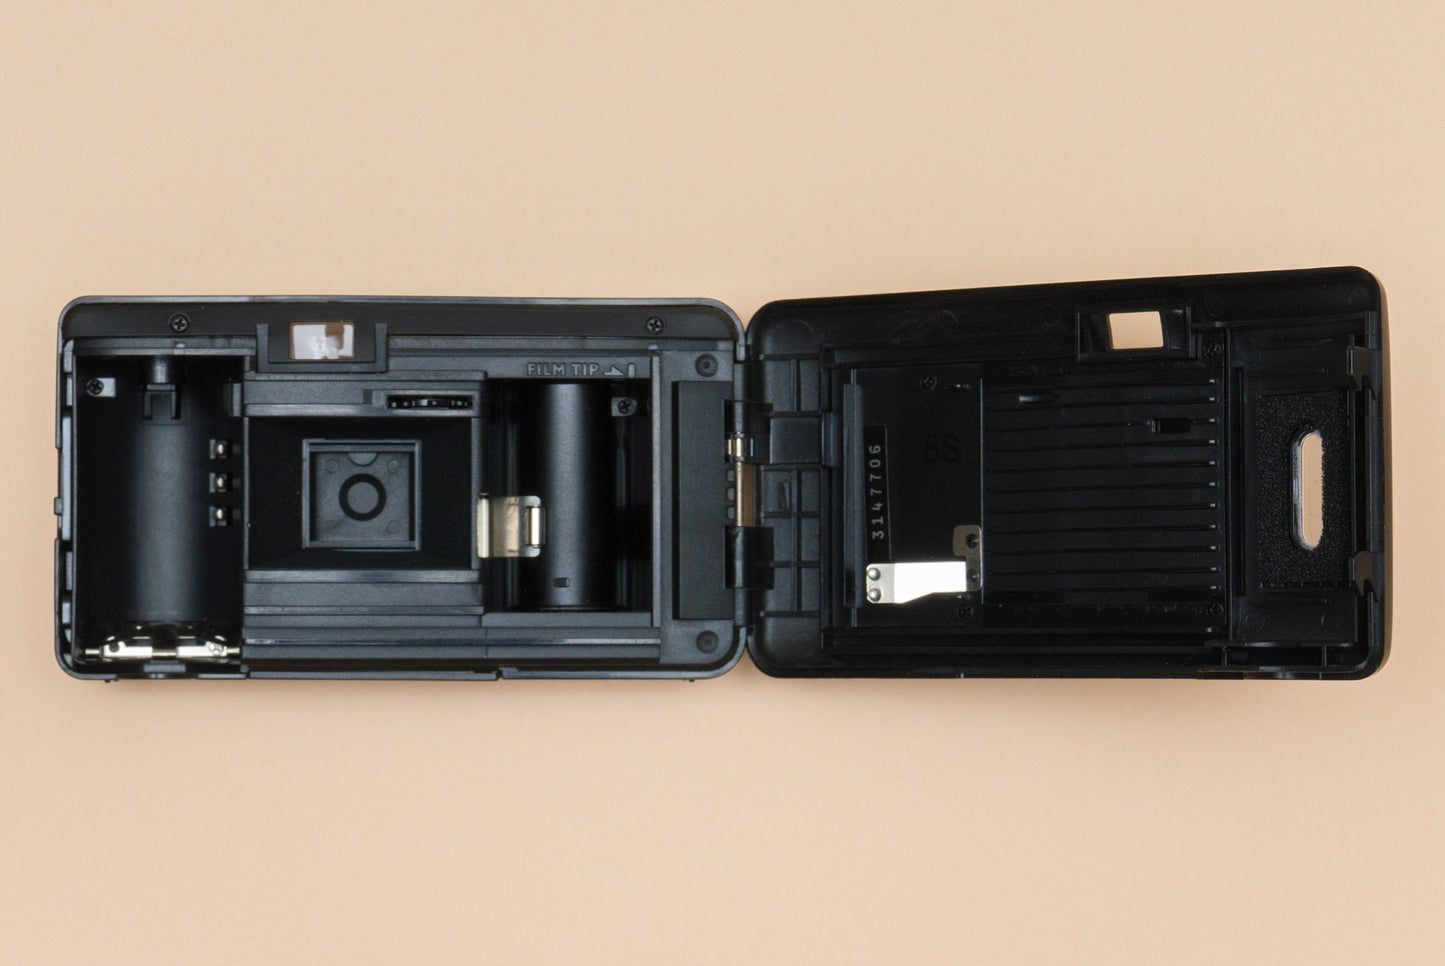 Konica K-mini EU-mini Compact 35mm Point and Shoot Film Camera